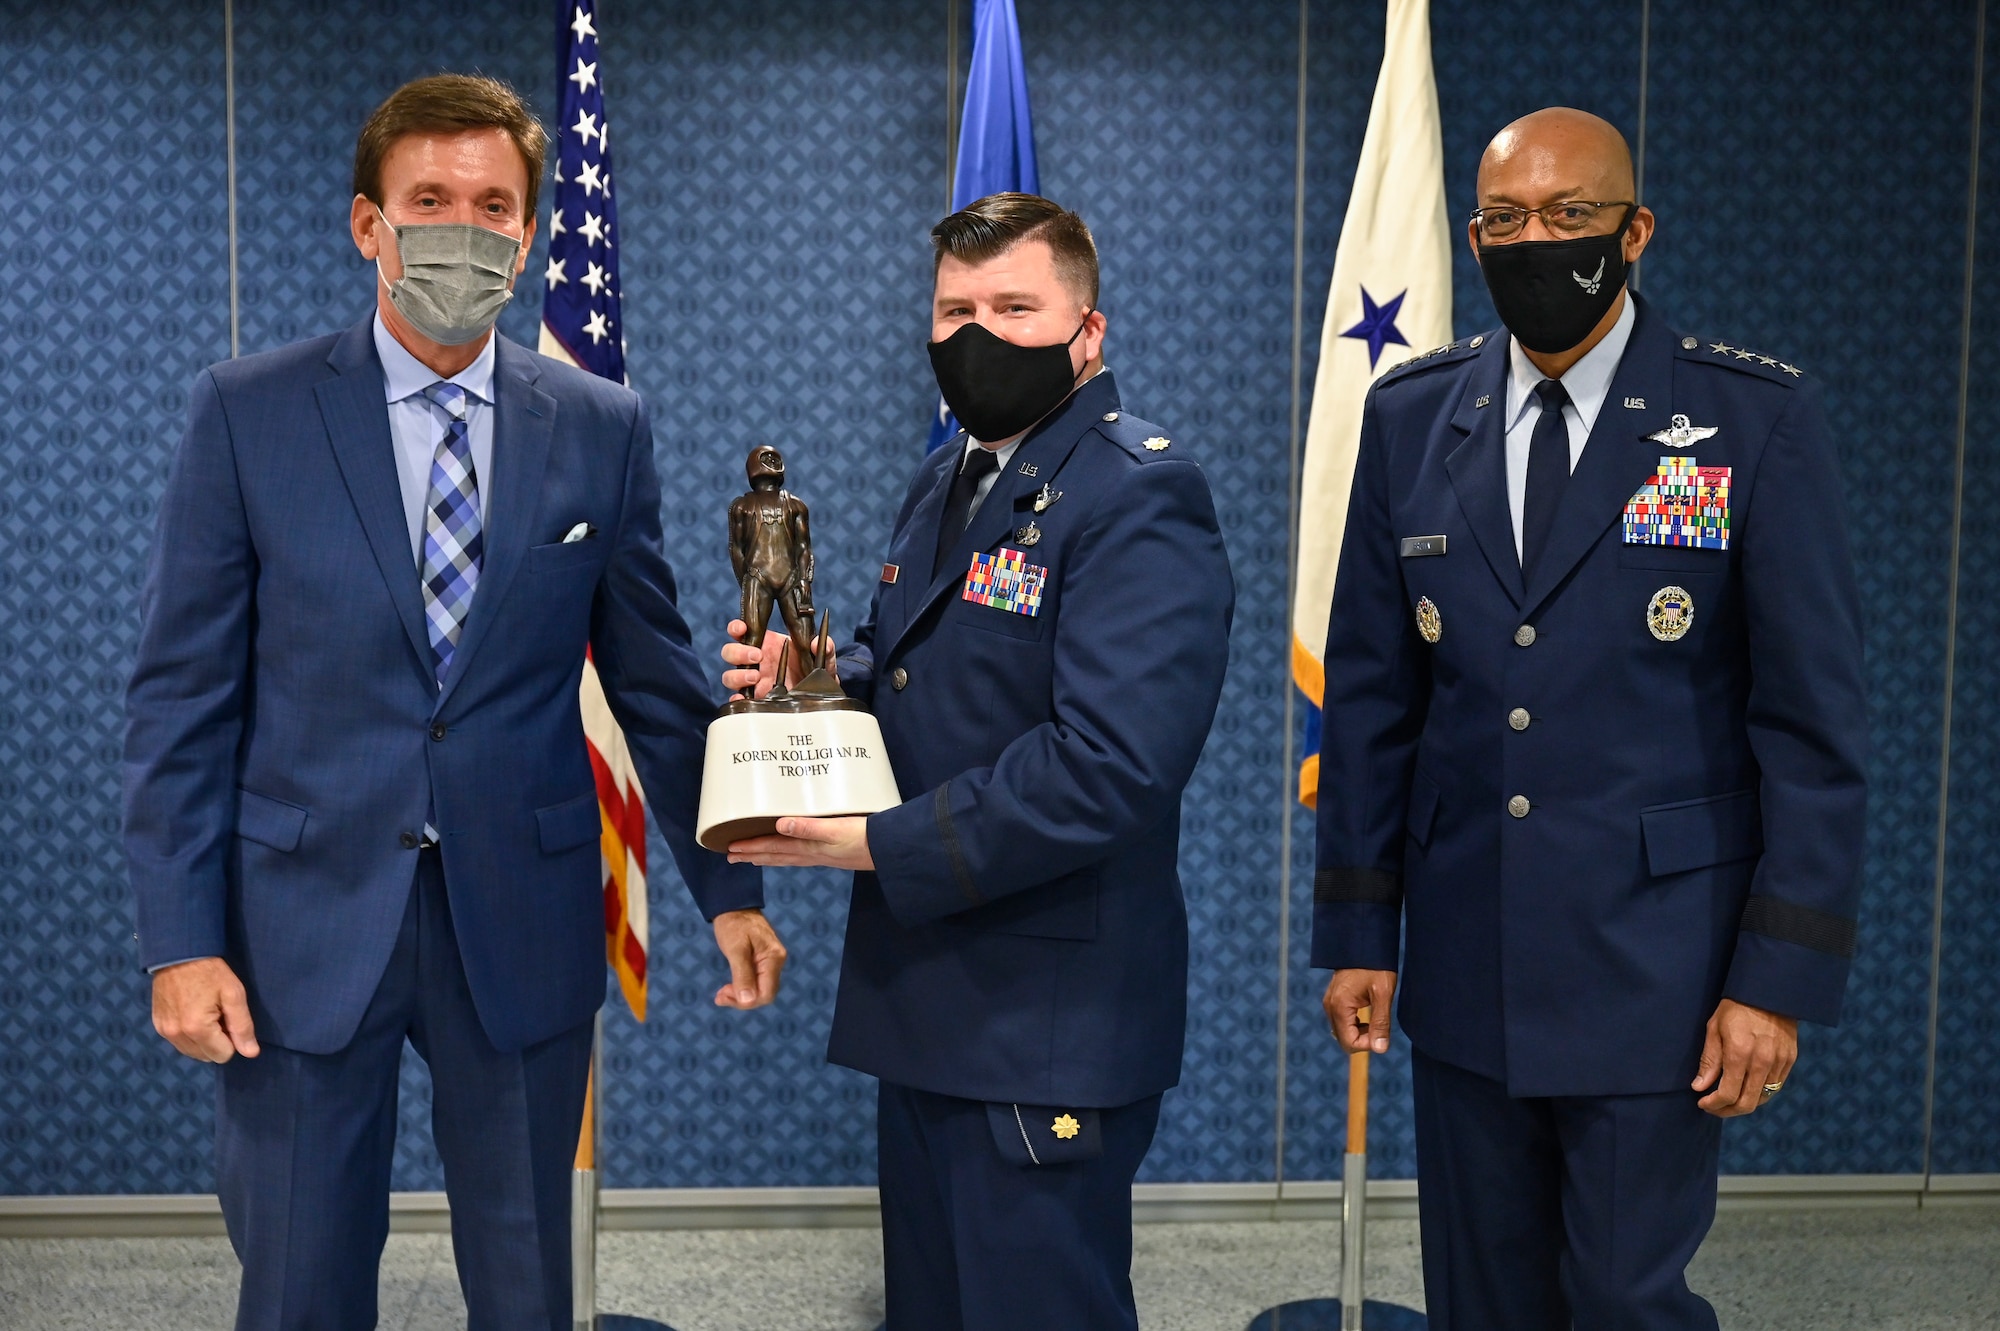 Photo of Maj. Justin Sager posing with Koren Kolligian II, left, and Air Force Chief of Staff Gen. CQ Brown, Jr. after receiving the 2019 Koren Kolligian Jr. Trophy